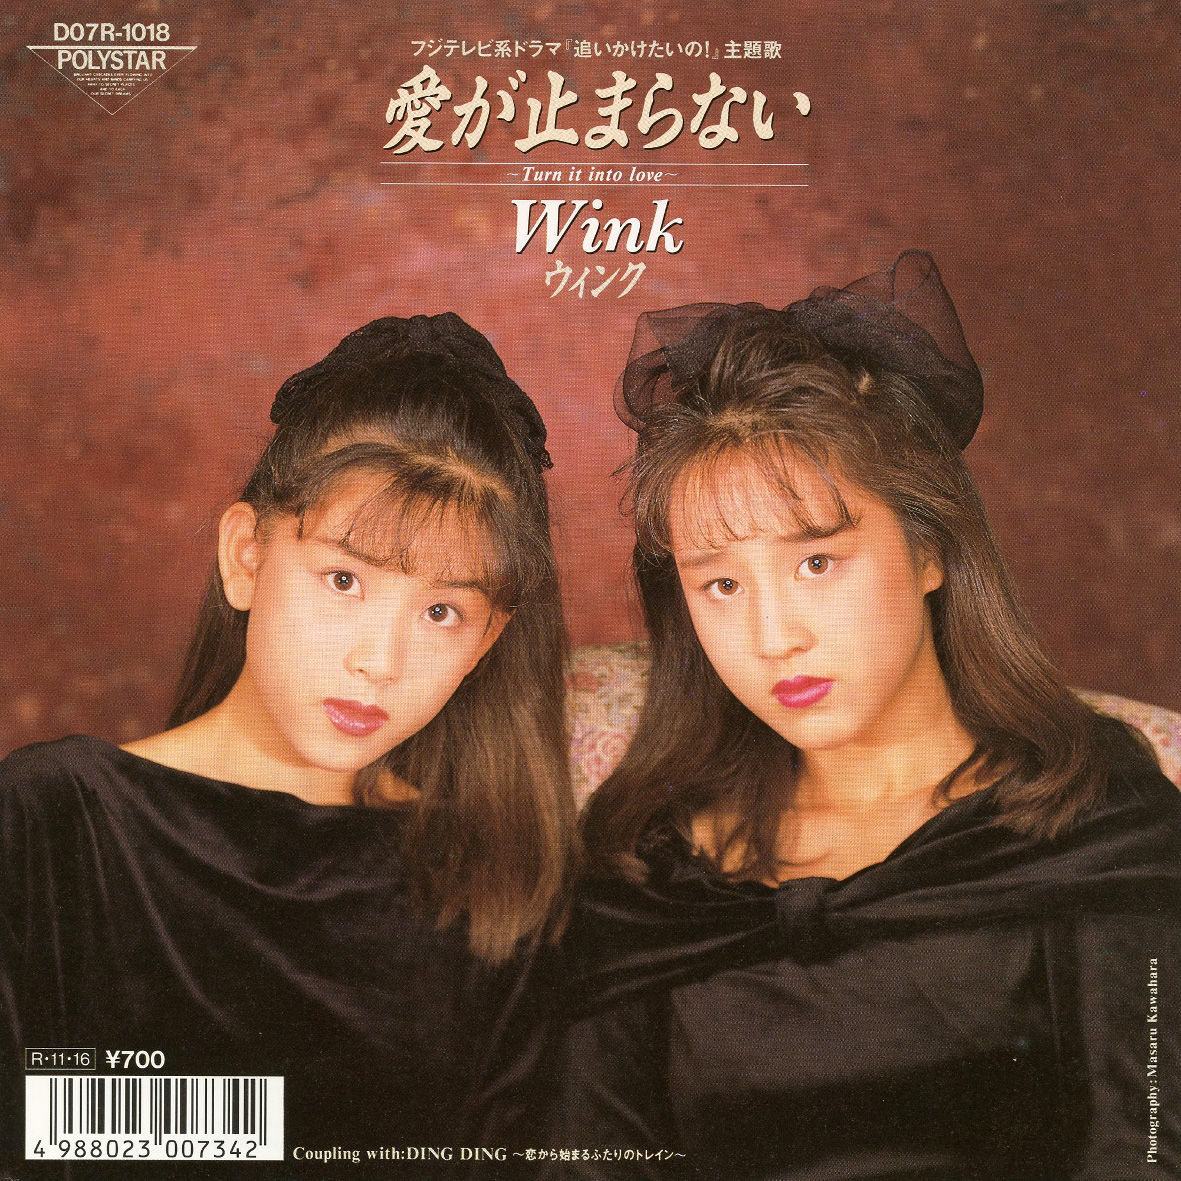 Turn it into Love. Wink Япония. Turn it into Love Japanese. Asia Covers LP. Into любить